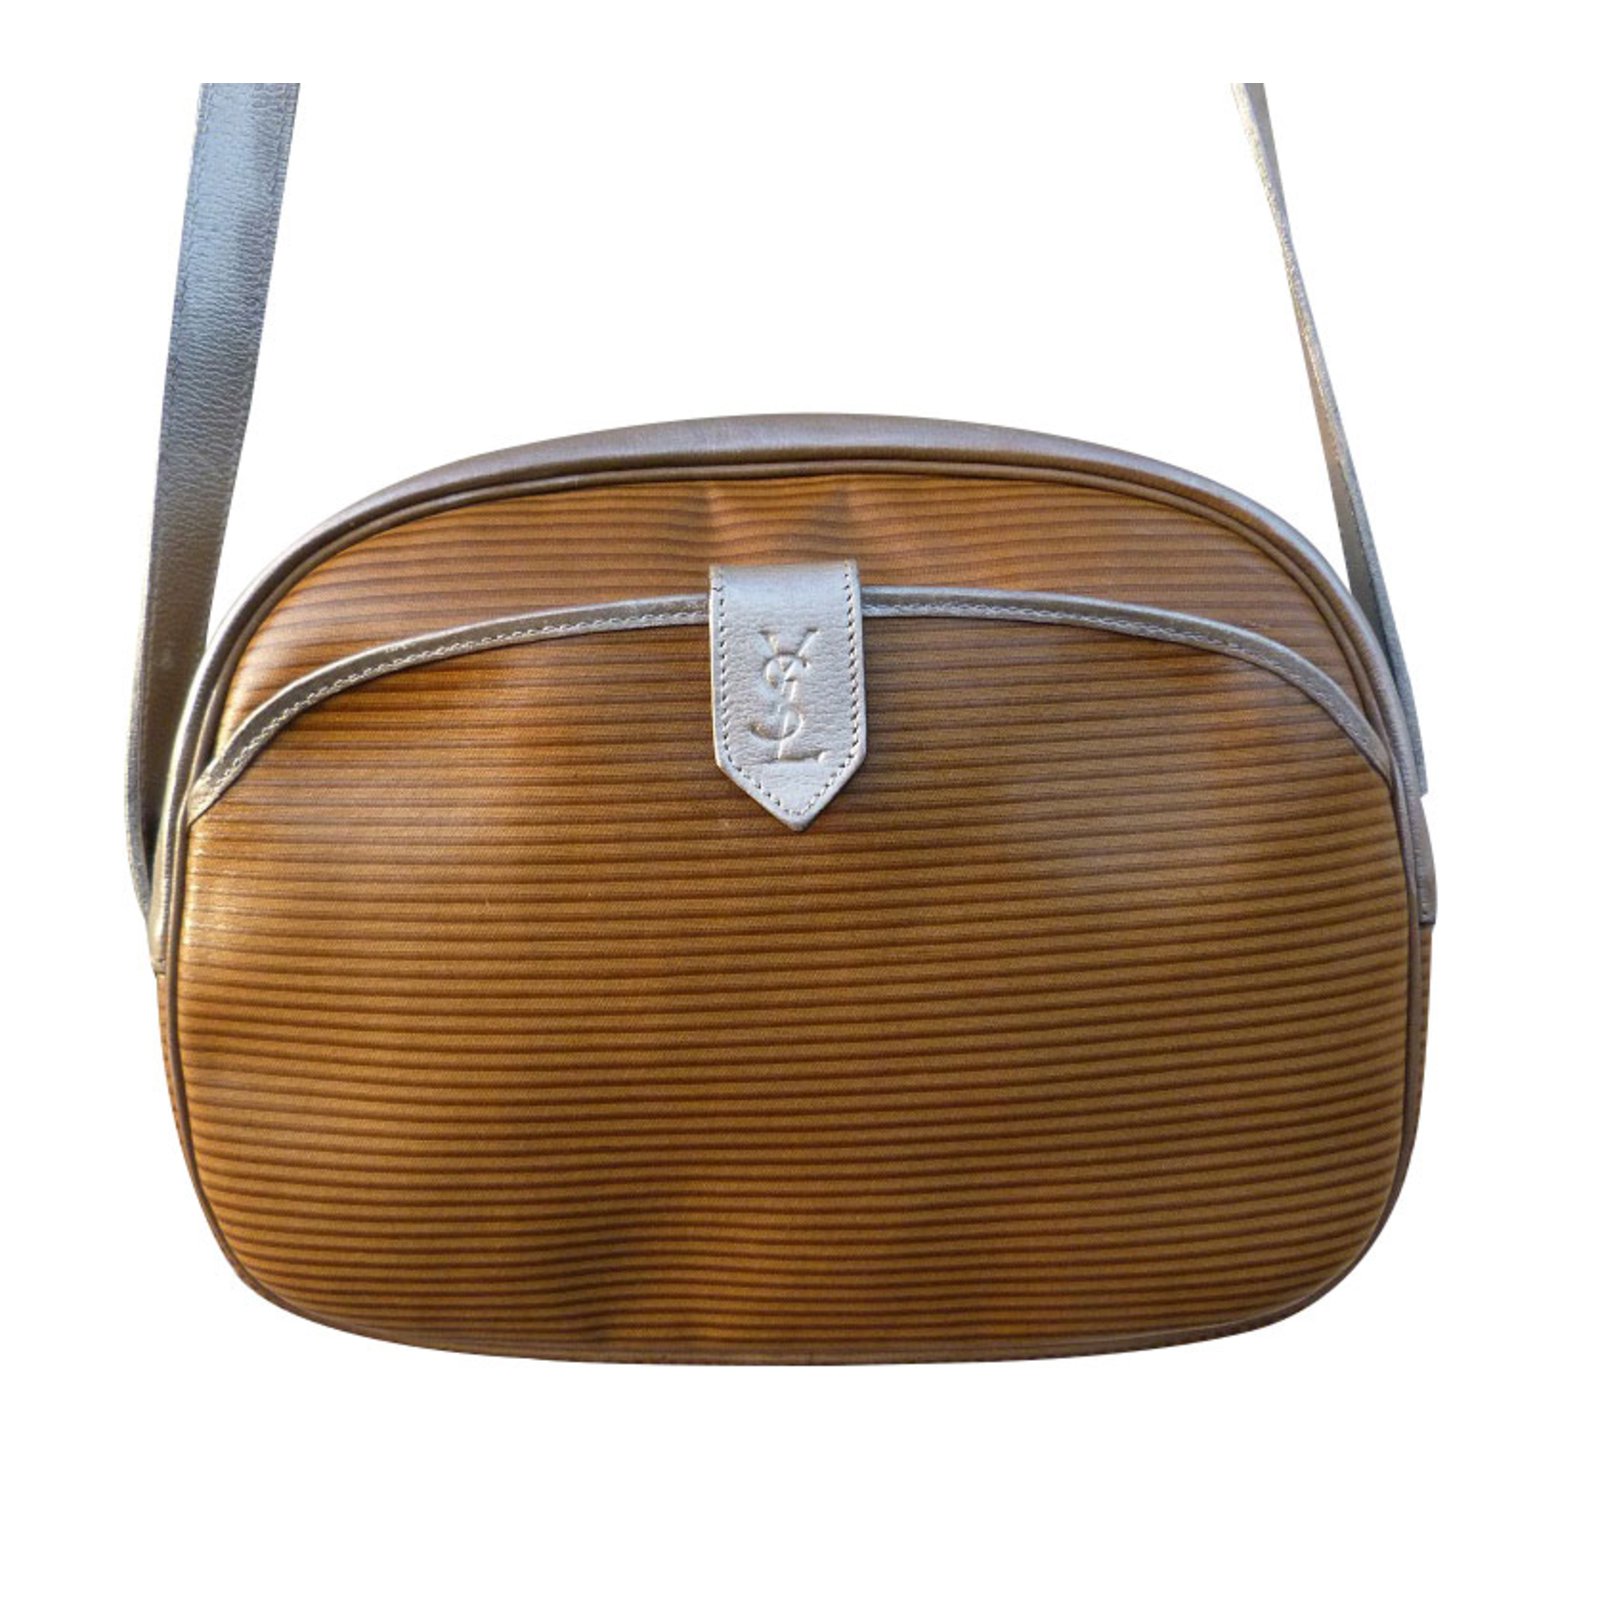 Yves Saint Laurent Handbags Silvery Mustard Light brown Leather